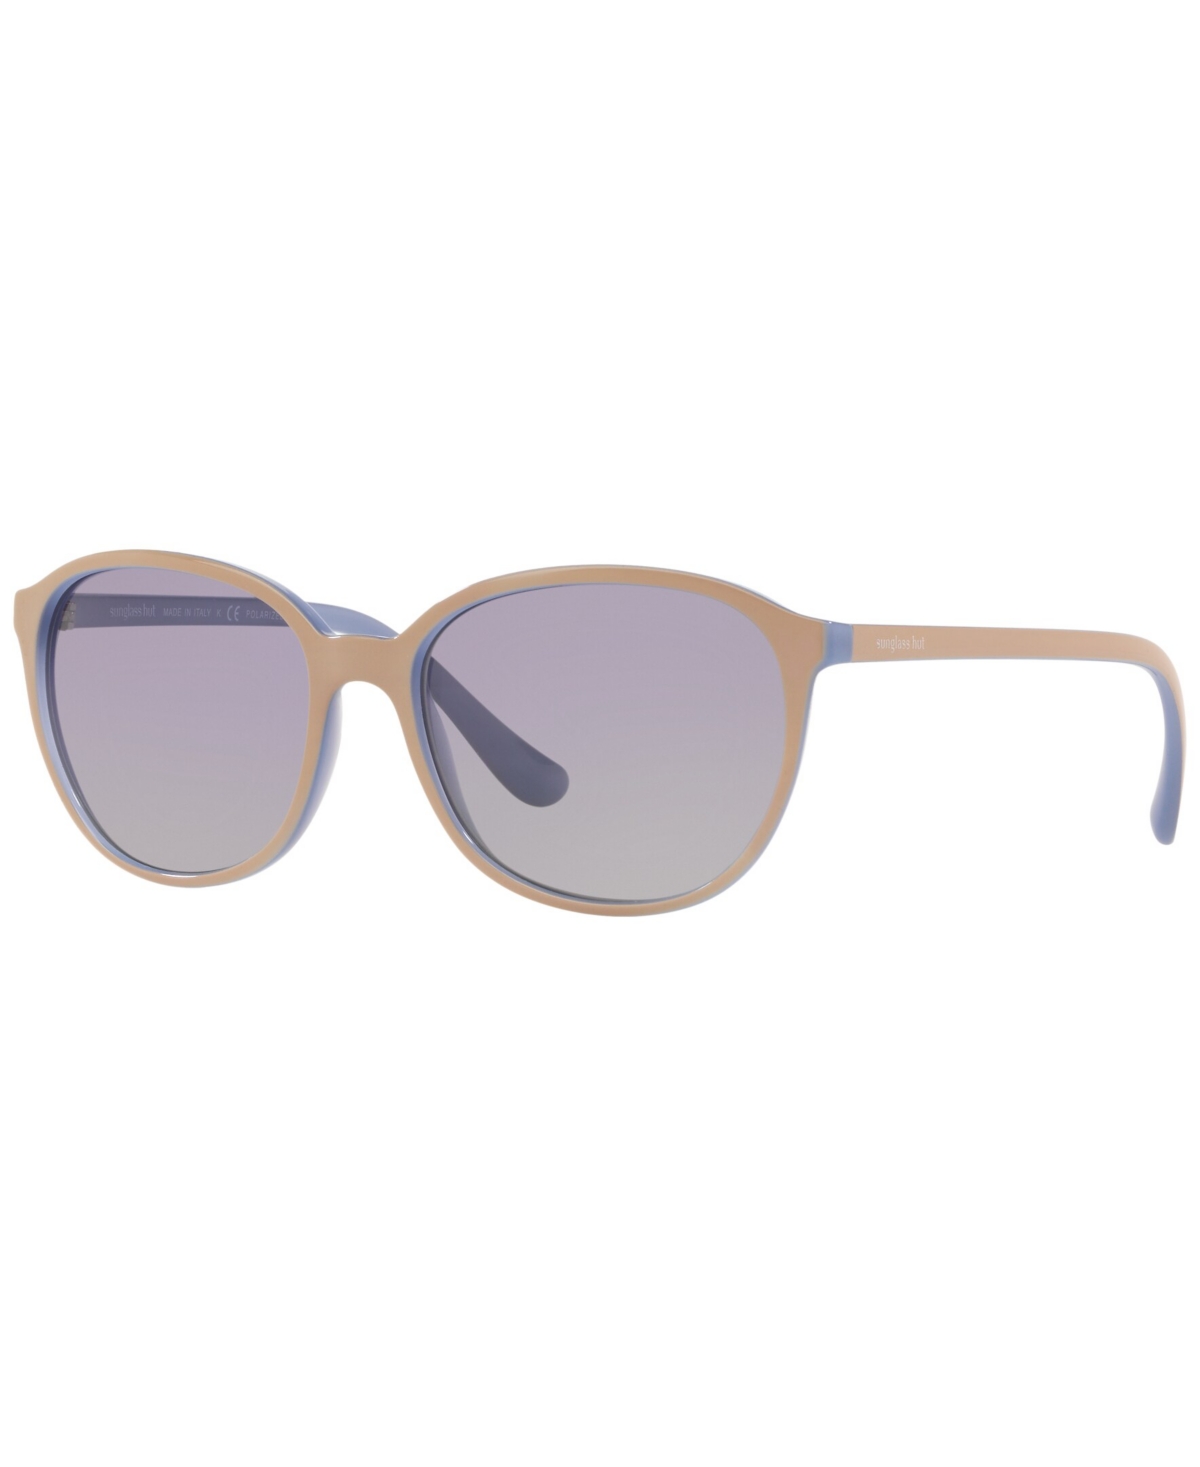 Women's Polarized Sunglasses, HU2003 - Top Beige on Azure